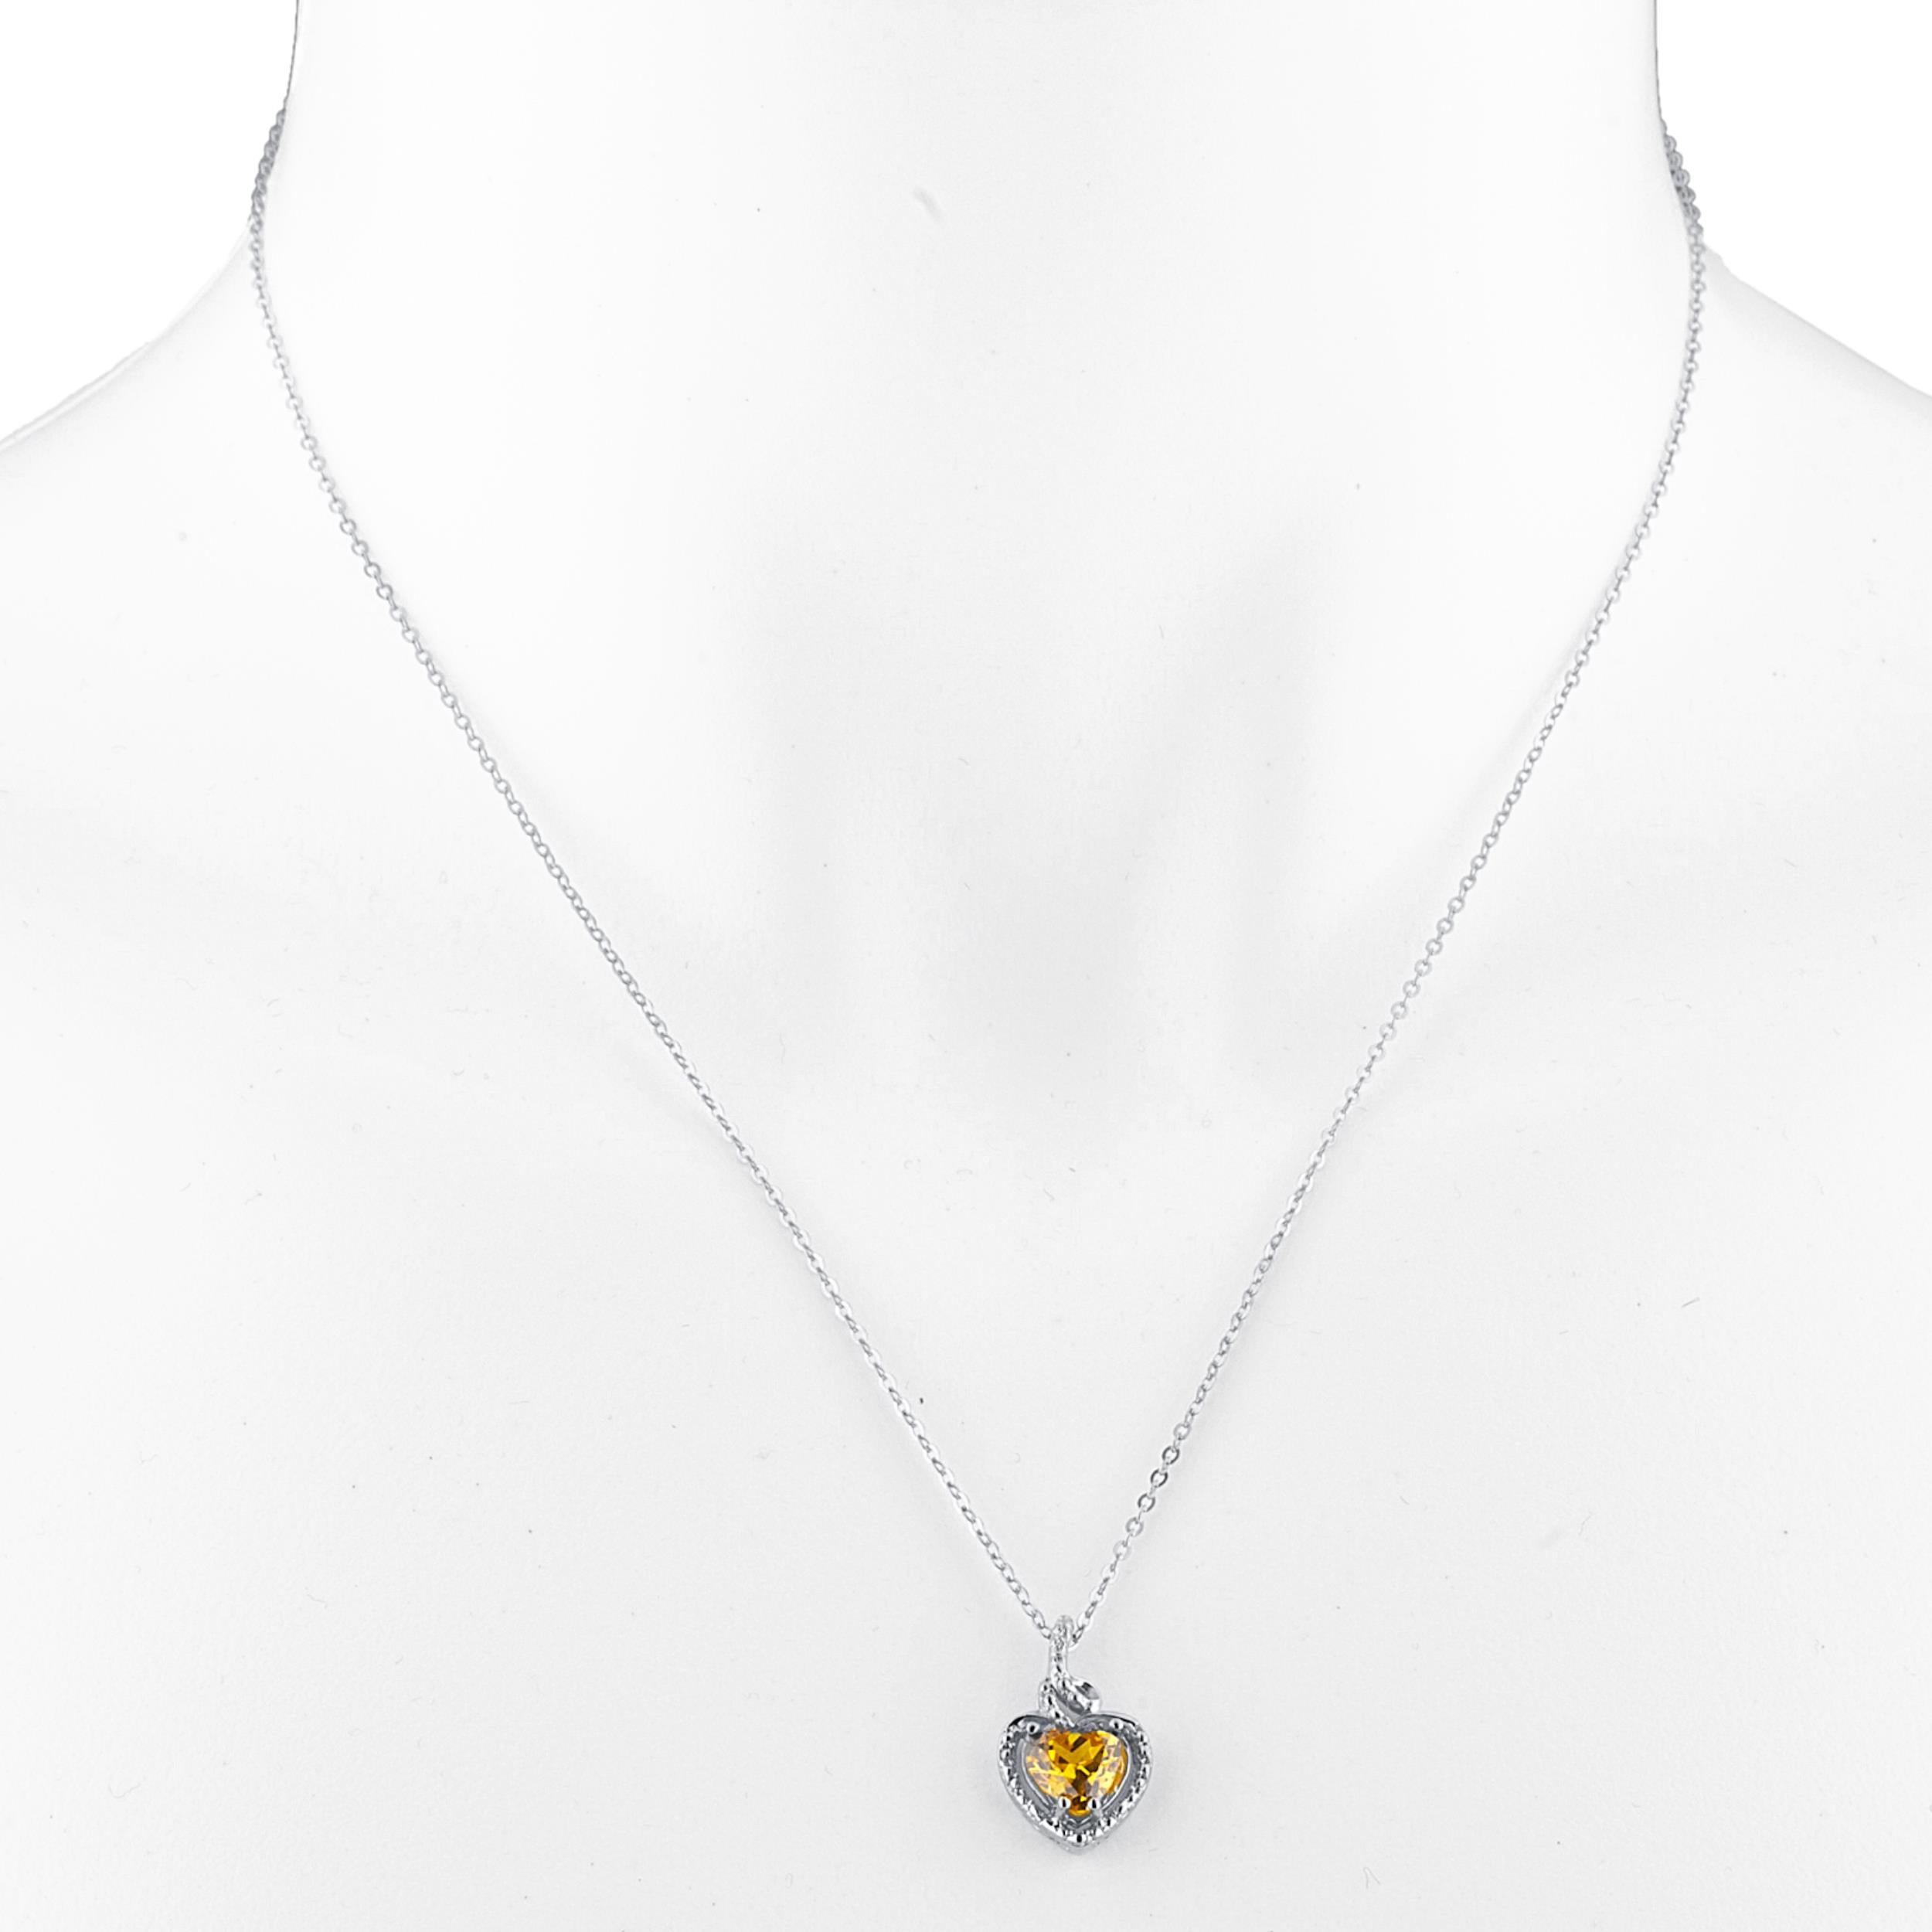 14Kt Gold Yellow Citrine Heart Design Pendant Necklace